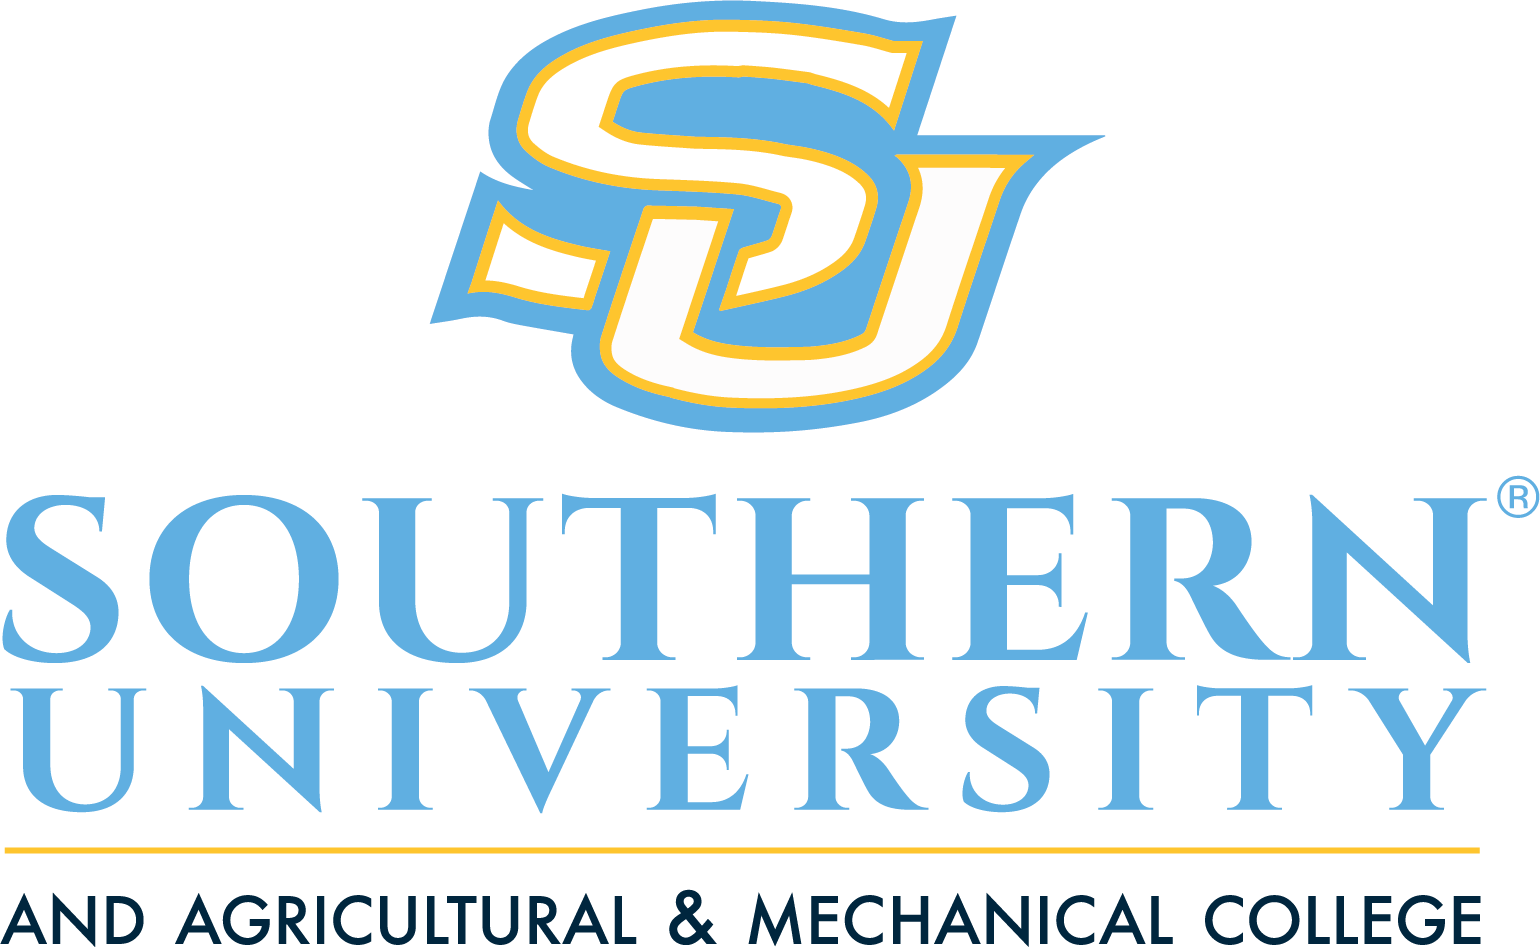 Southern University logo. University of Southern California. Southern University and a m College System 1880logo. Southern university